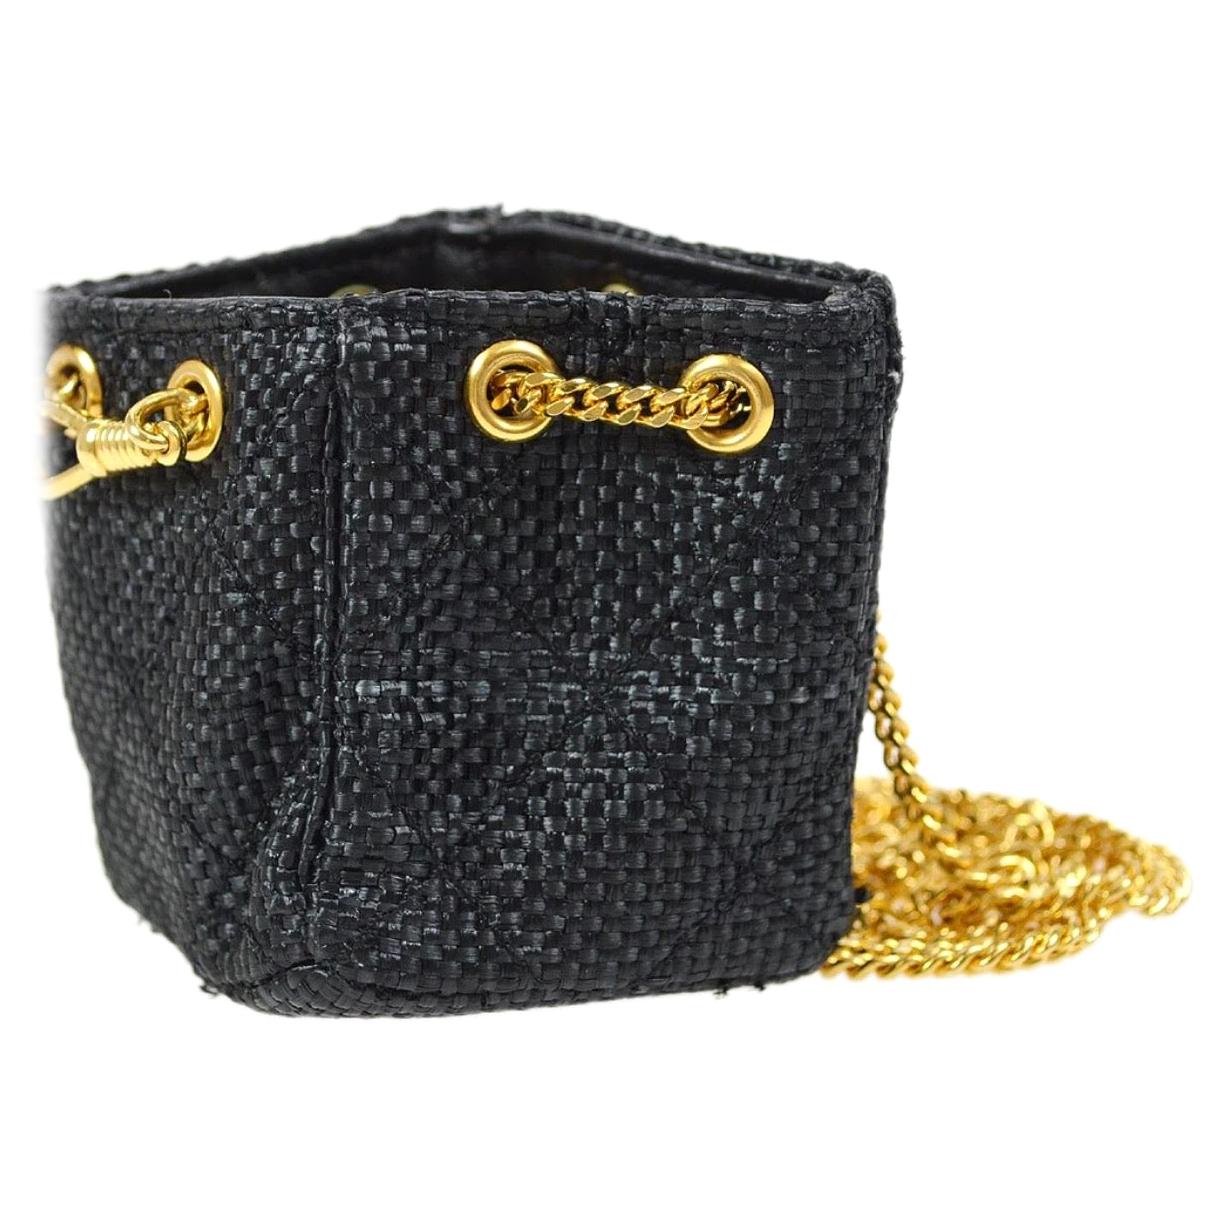 Chanel Black Straw Gold Small Micro Mini Top Handle Evening Satchel Shoulder Bag